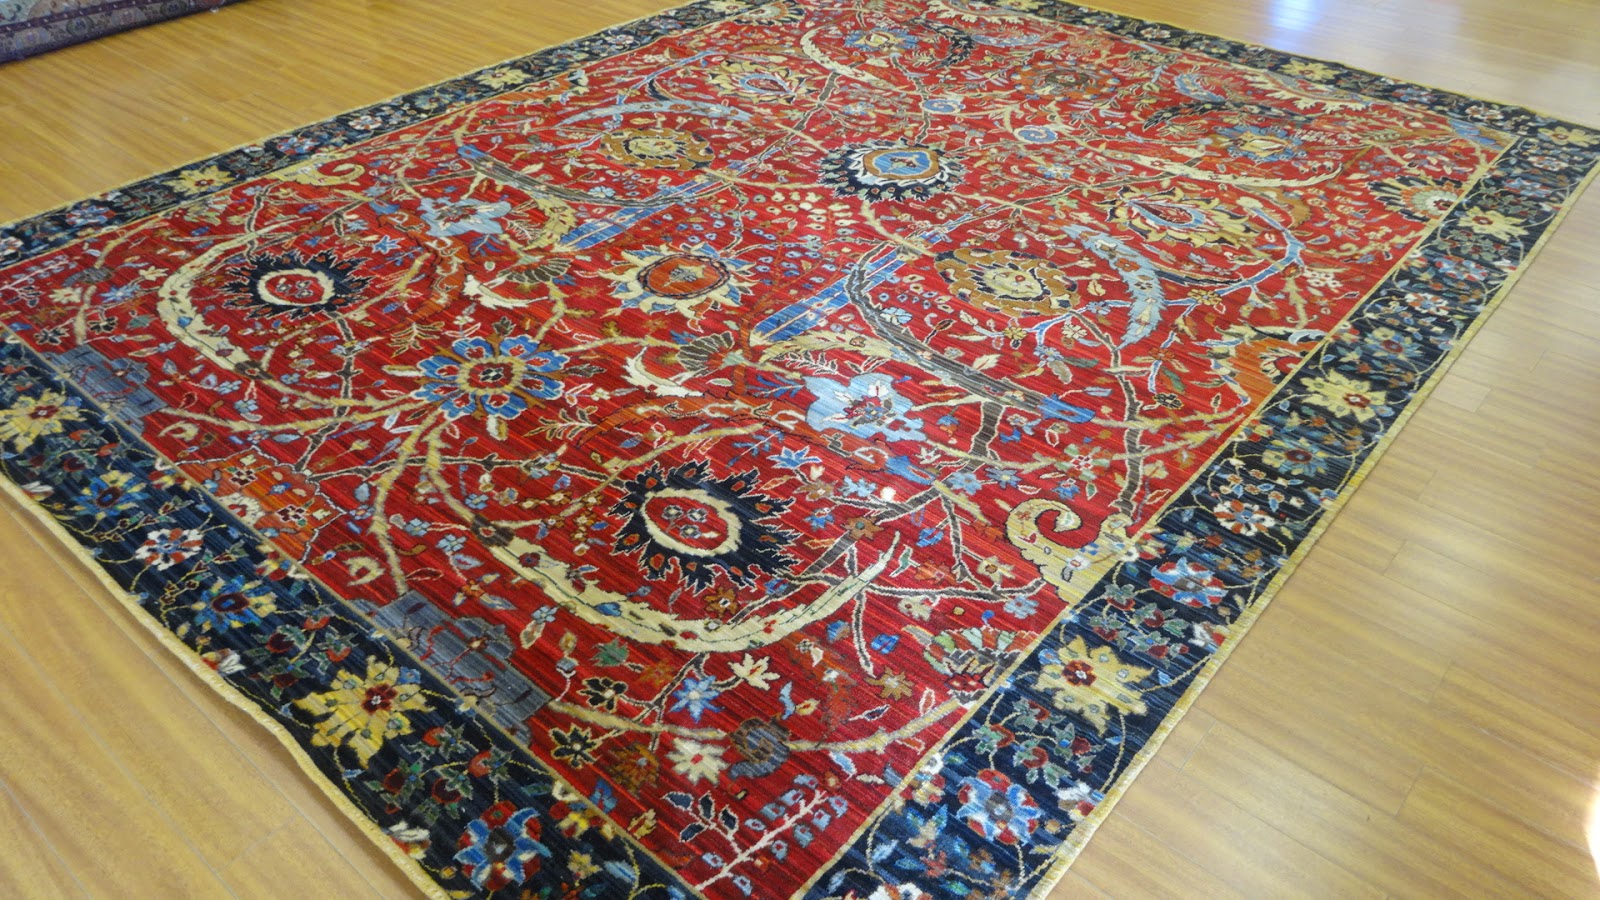 Most Expensive Persian Rug Ever - Carpet Vidalondon